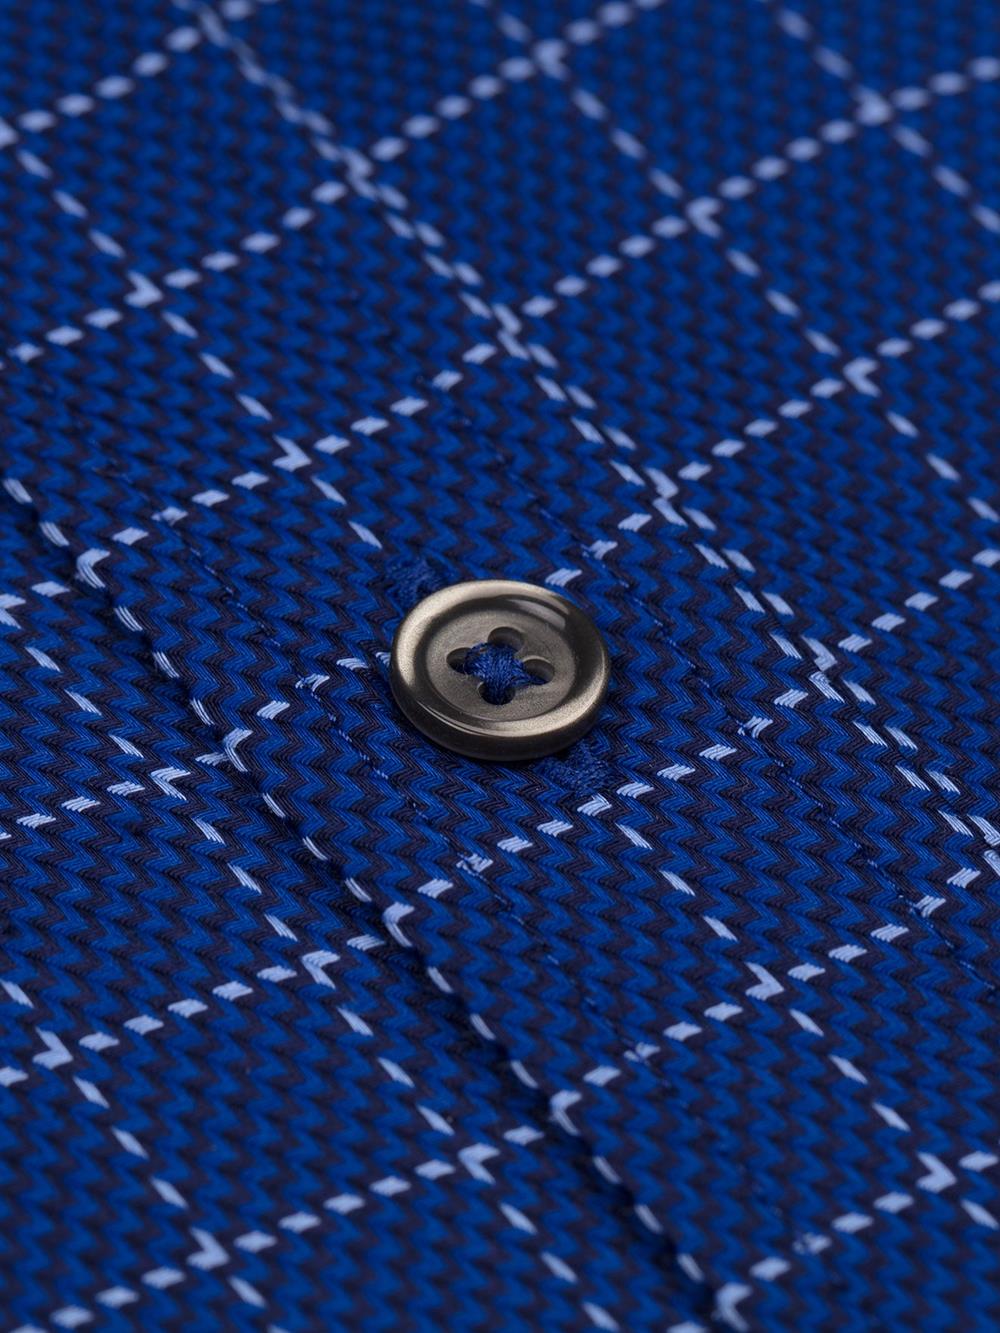 Brett sky blue checked shirt - Button-down collar